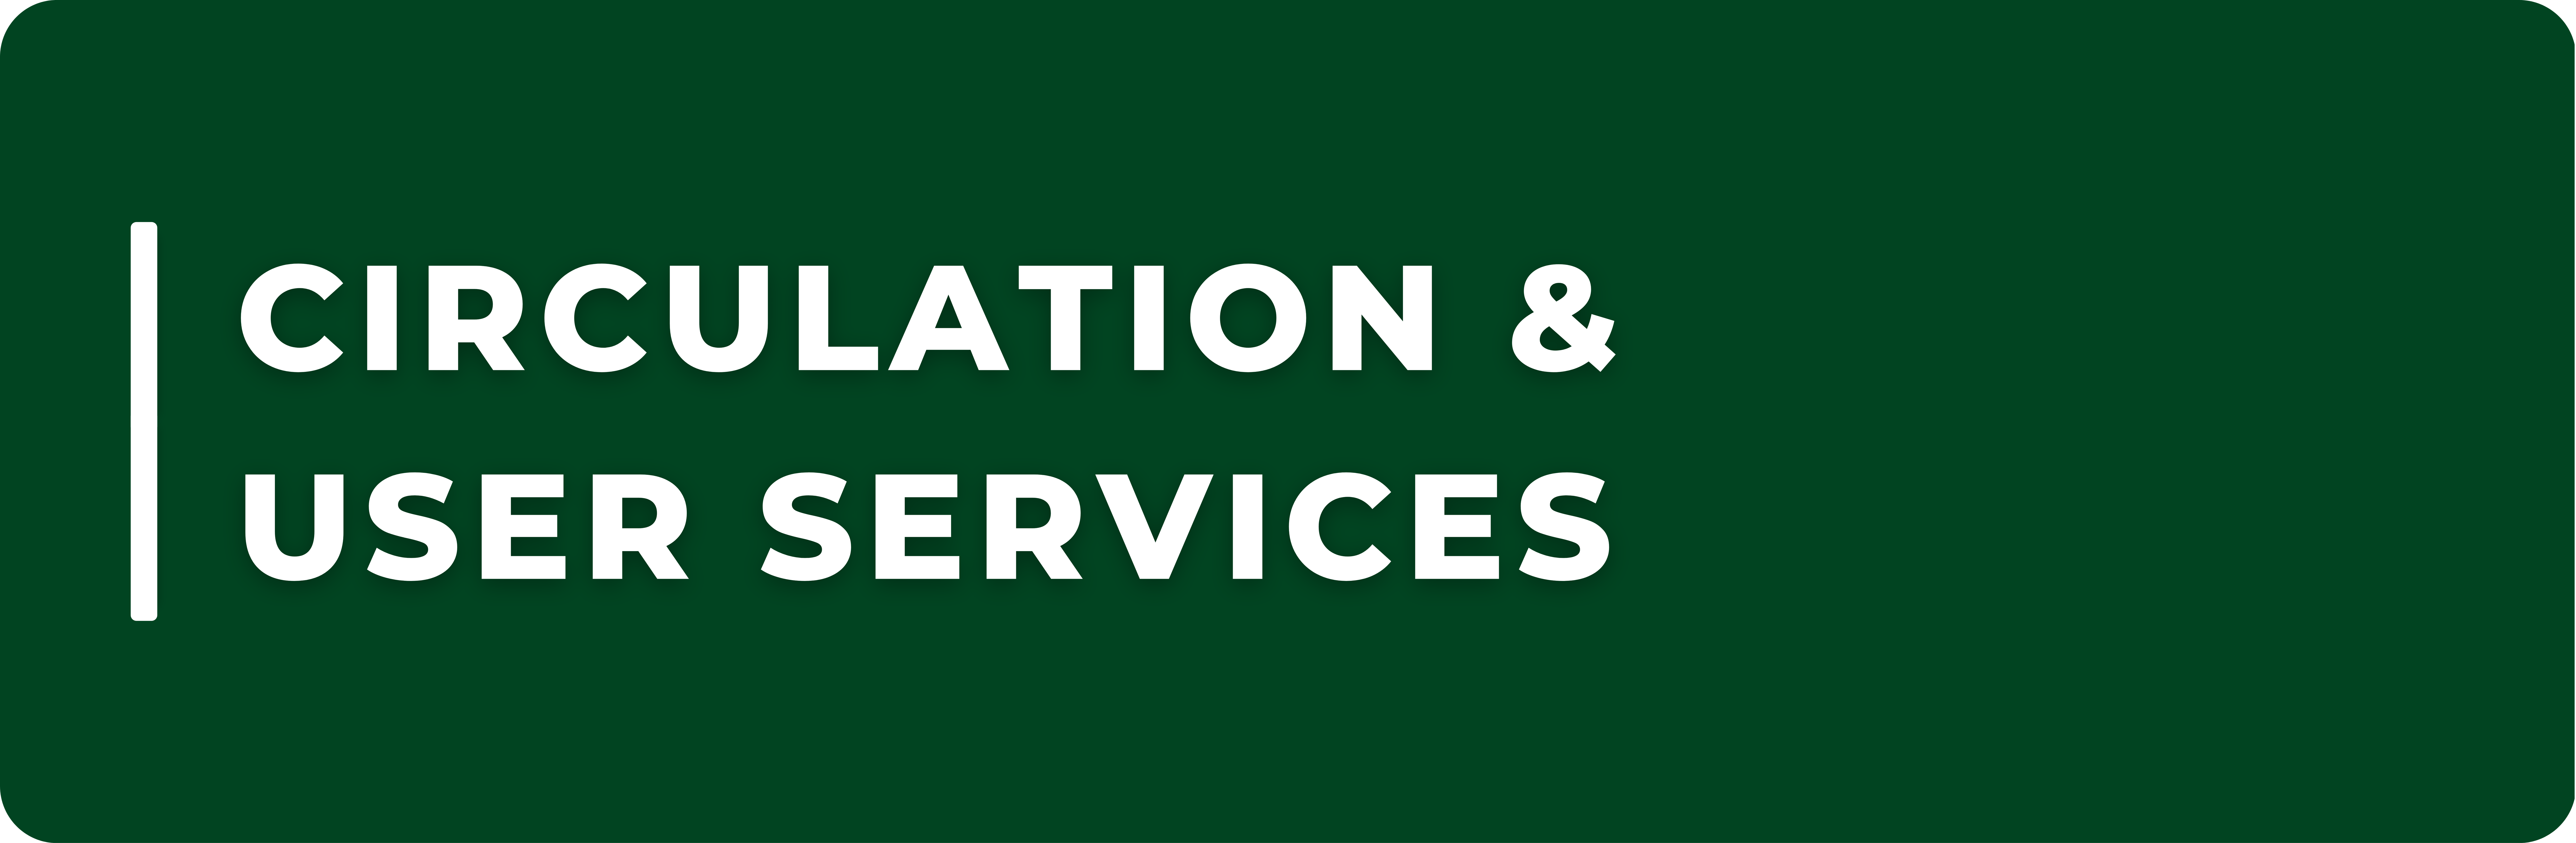 Circulation & User Service